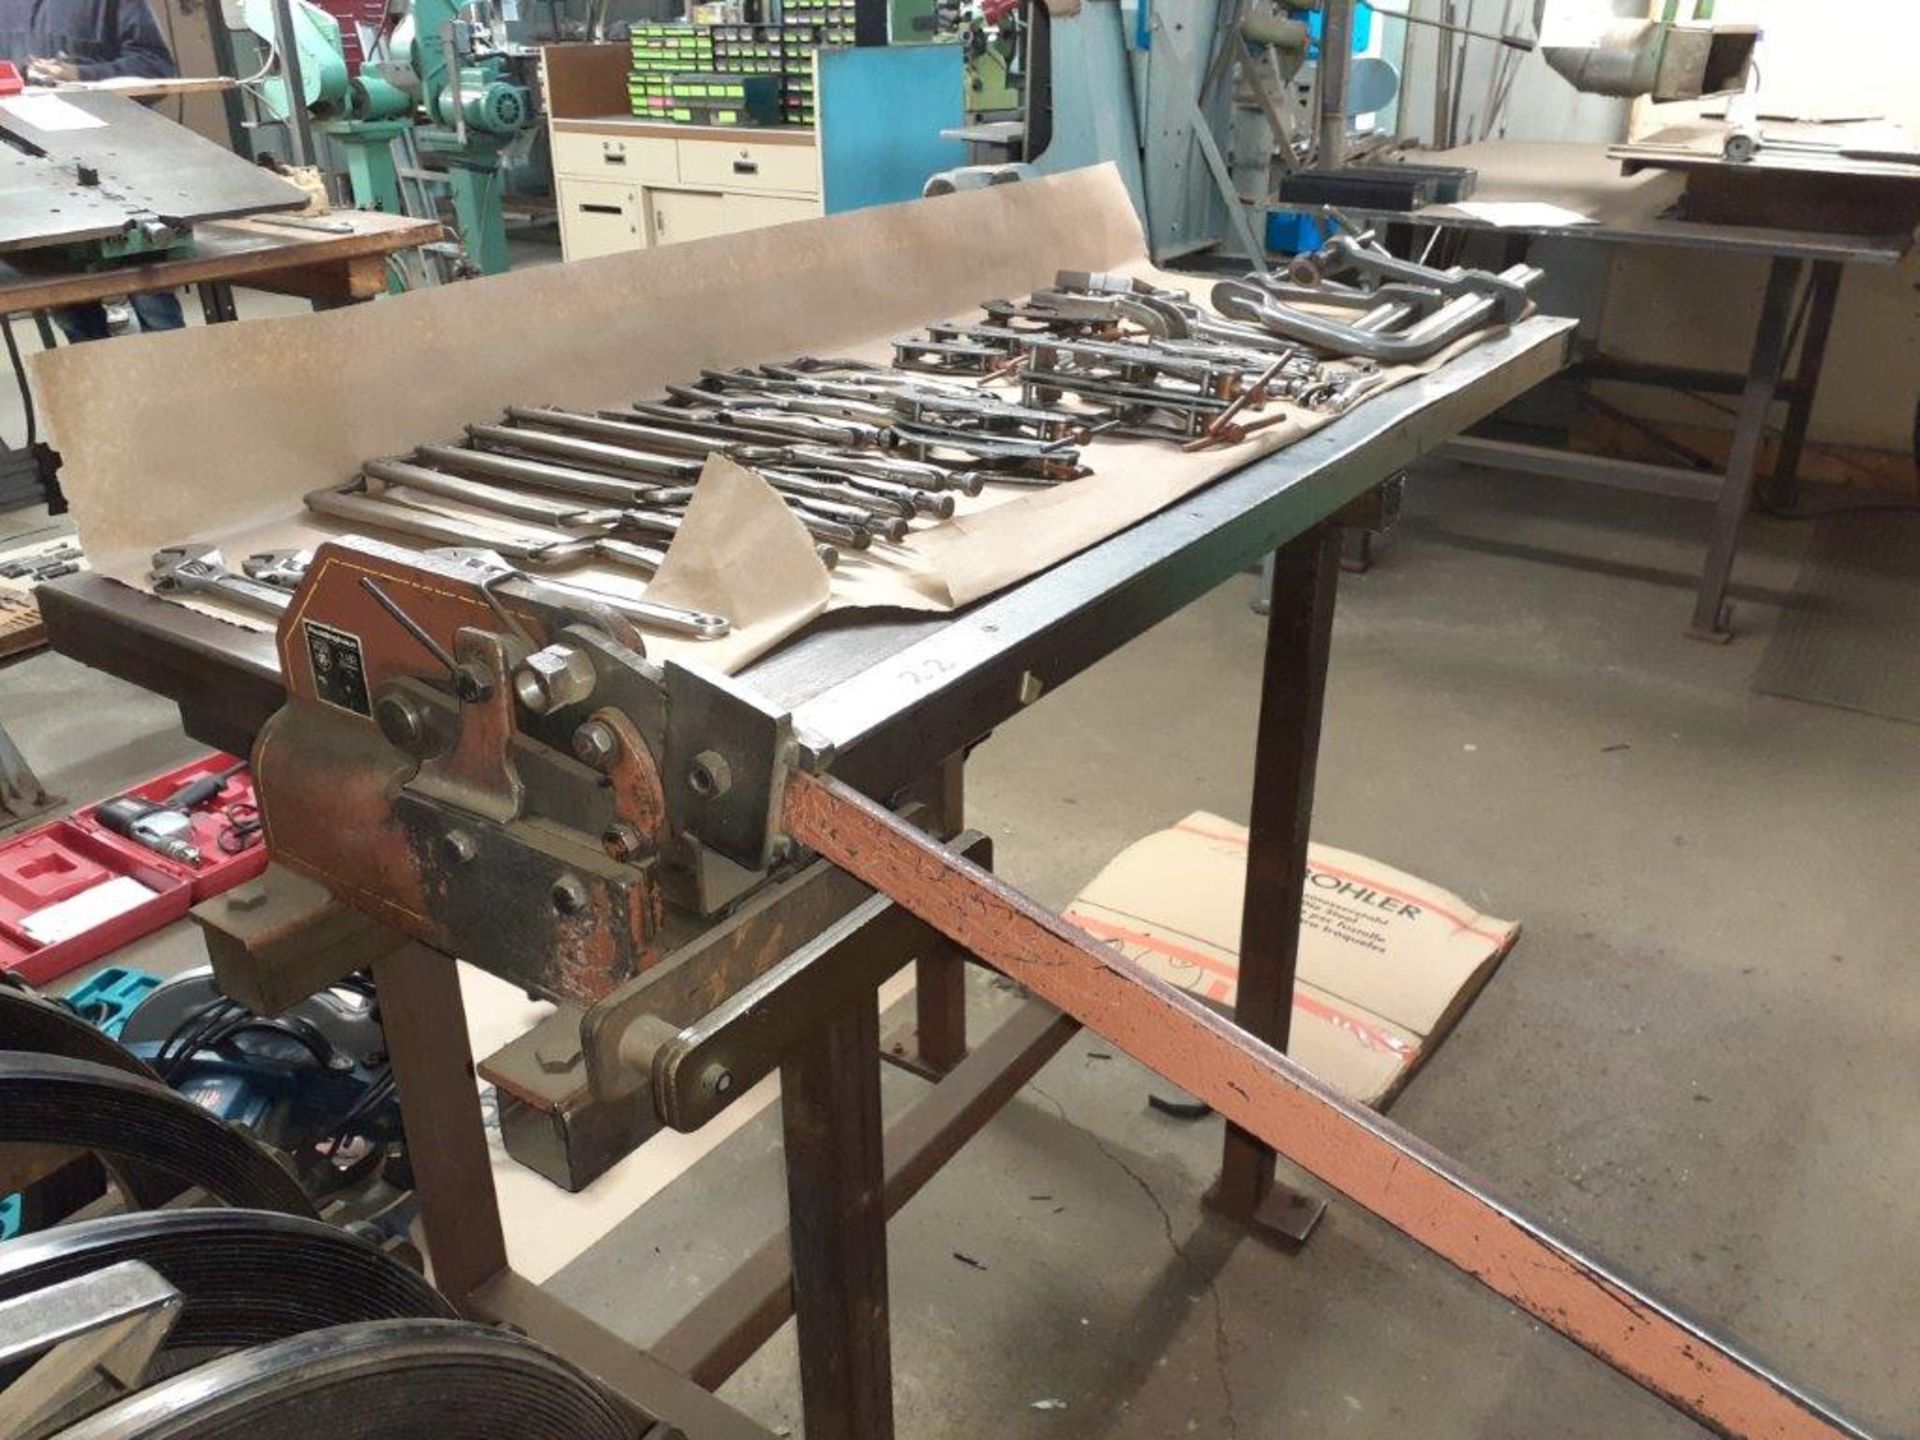 Steel Work Table, c/w PEDDINGHAWS Shear - Image 2 of 4